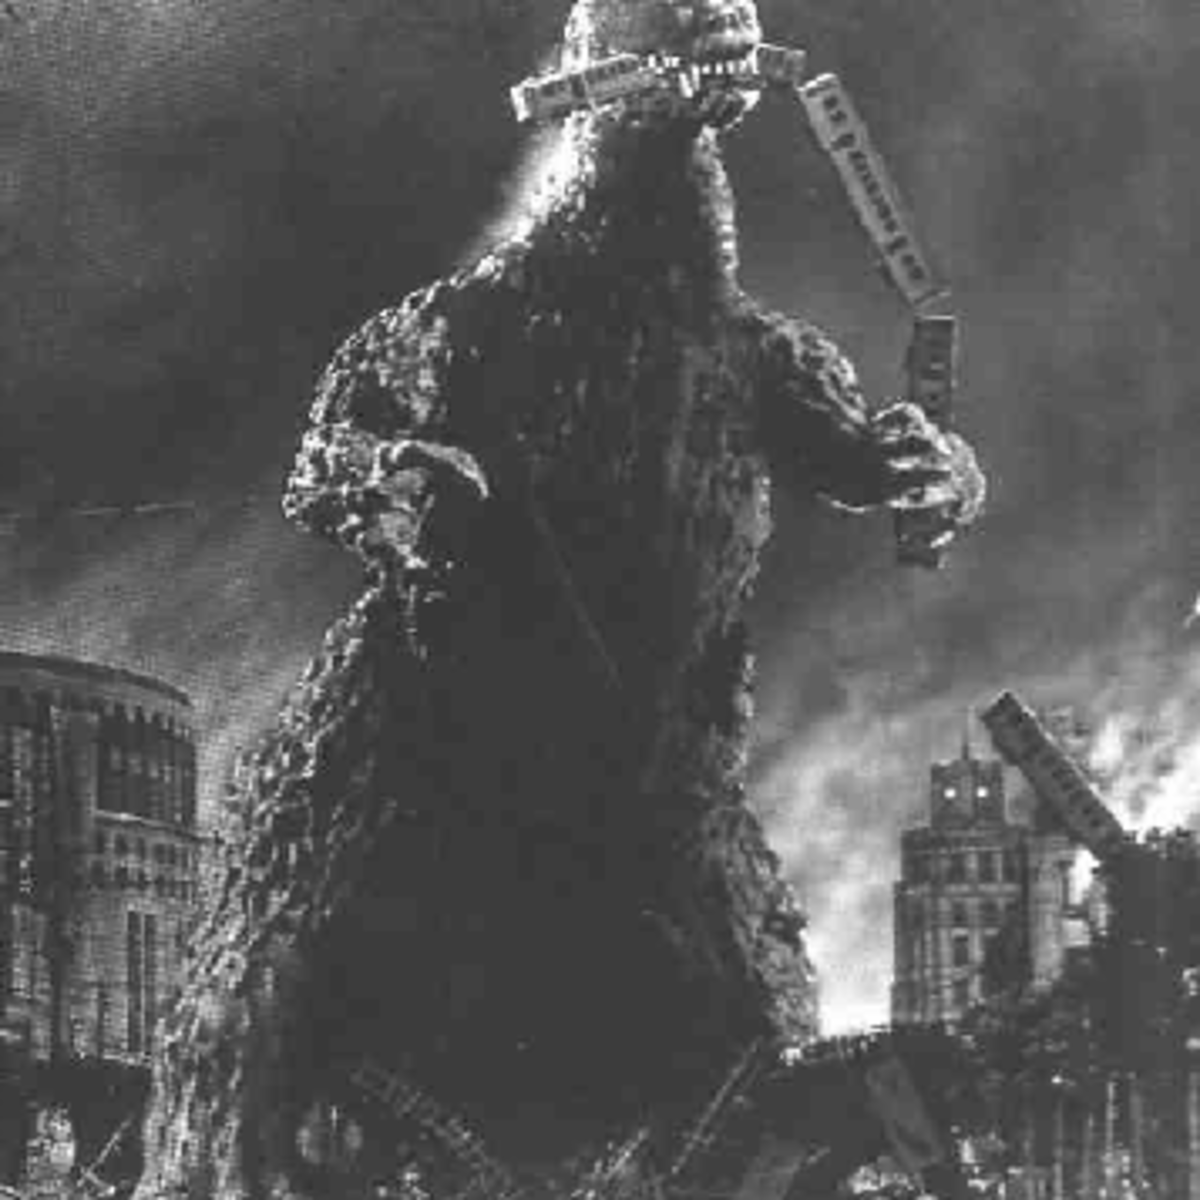 Legendary Godzilla VS Godzilla Earth, BATTLE ARENA